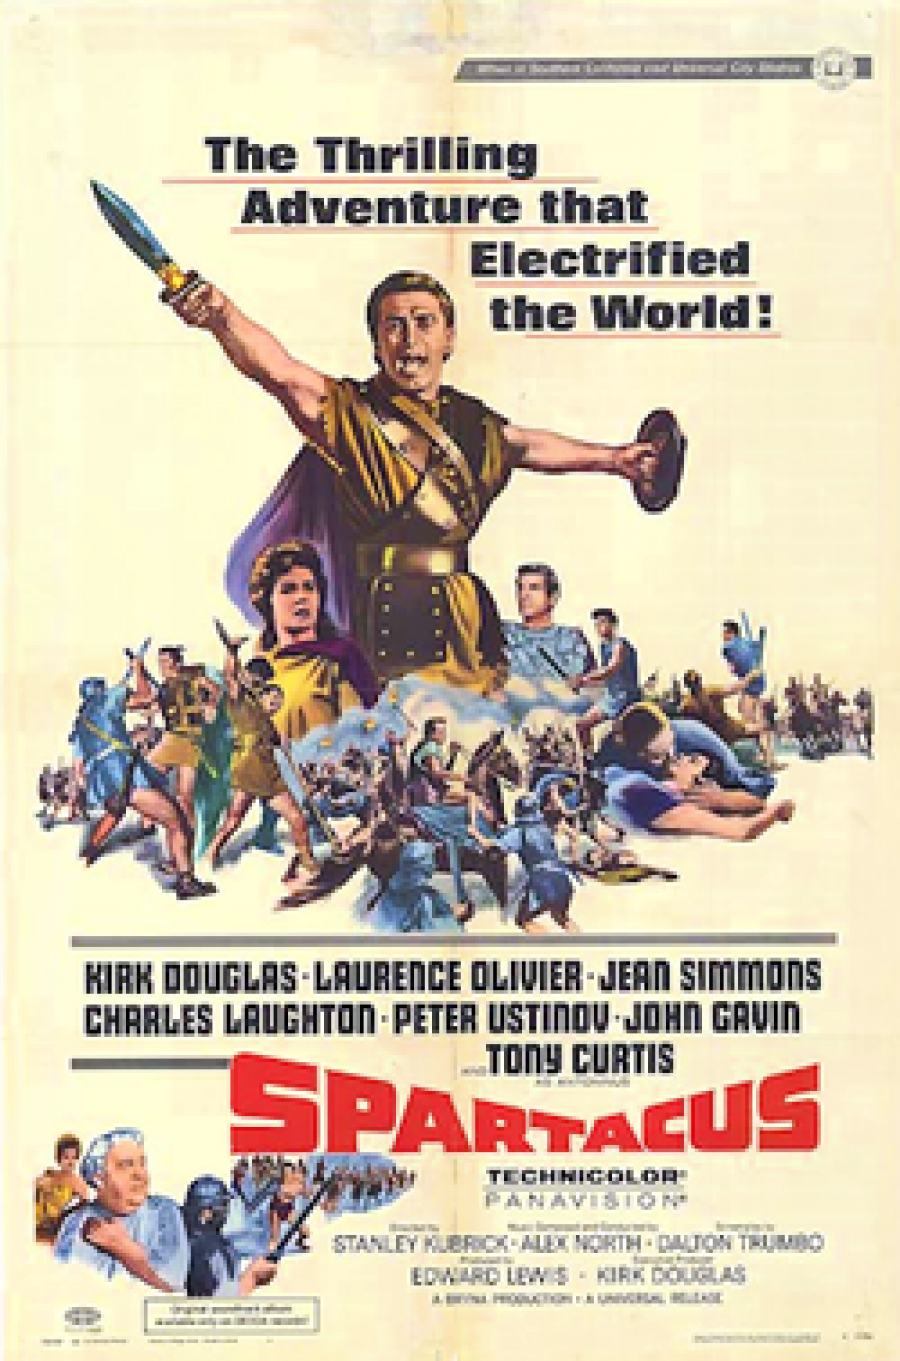 Plakat fra filmen 'Spartacus'